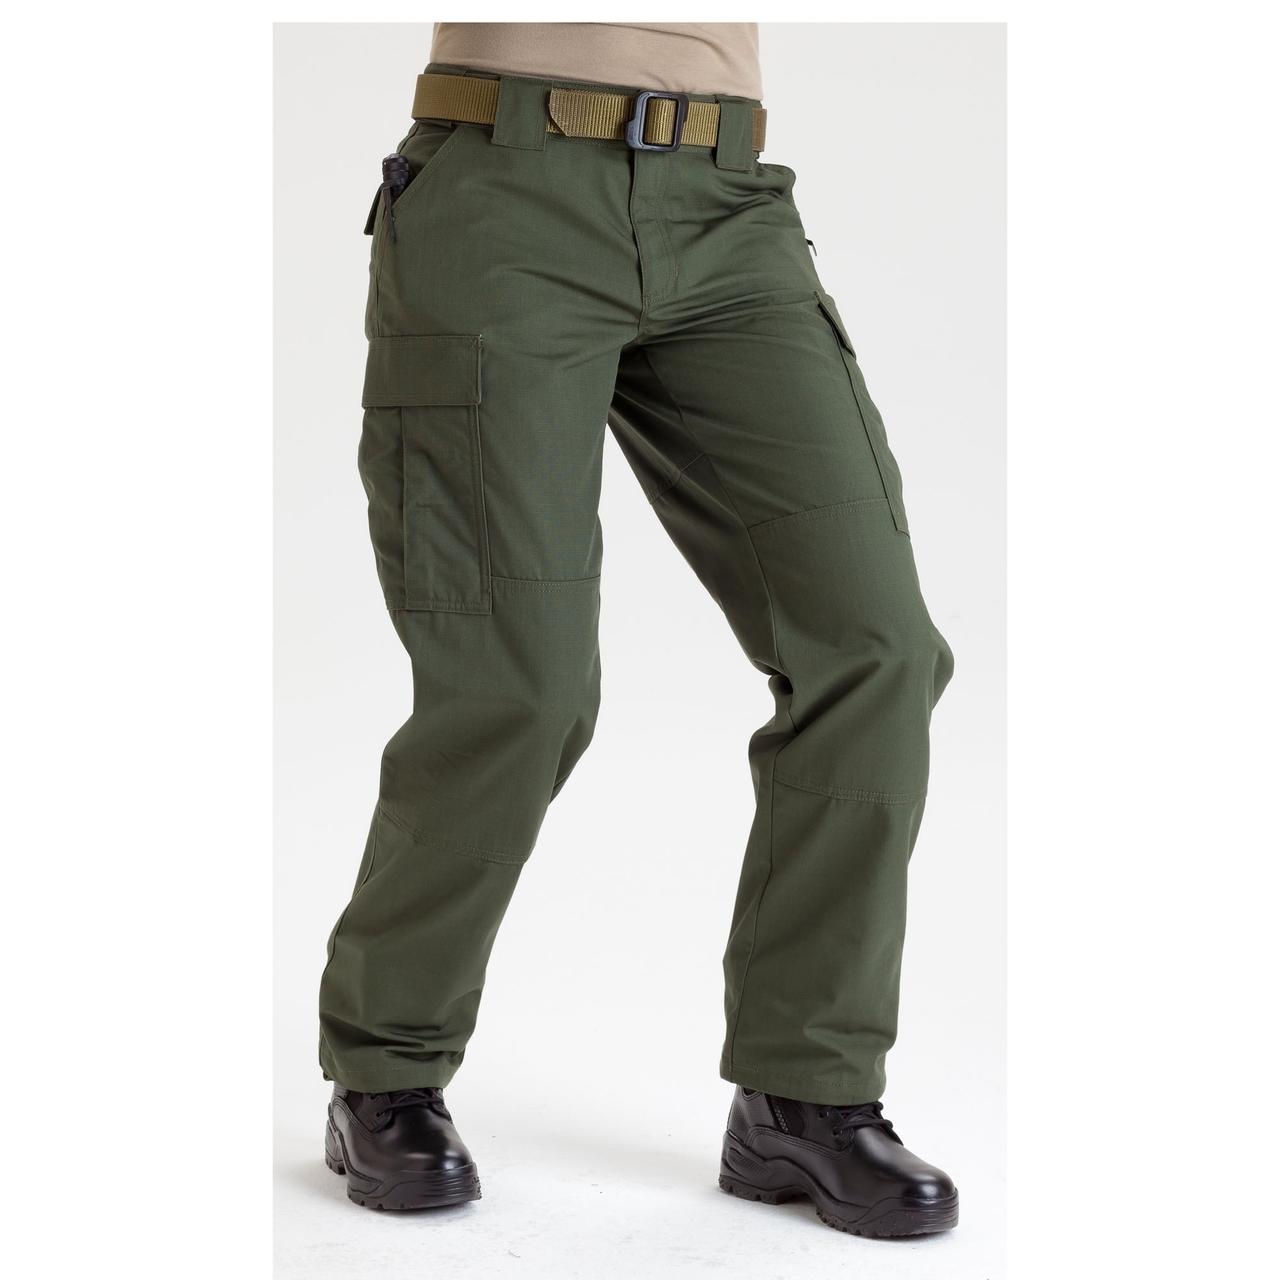 5.11 Tactical Women's TDU Uniform Pant 64359